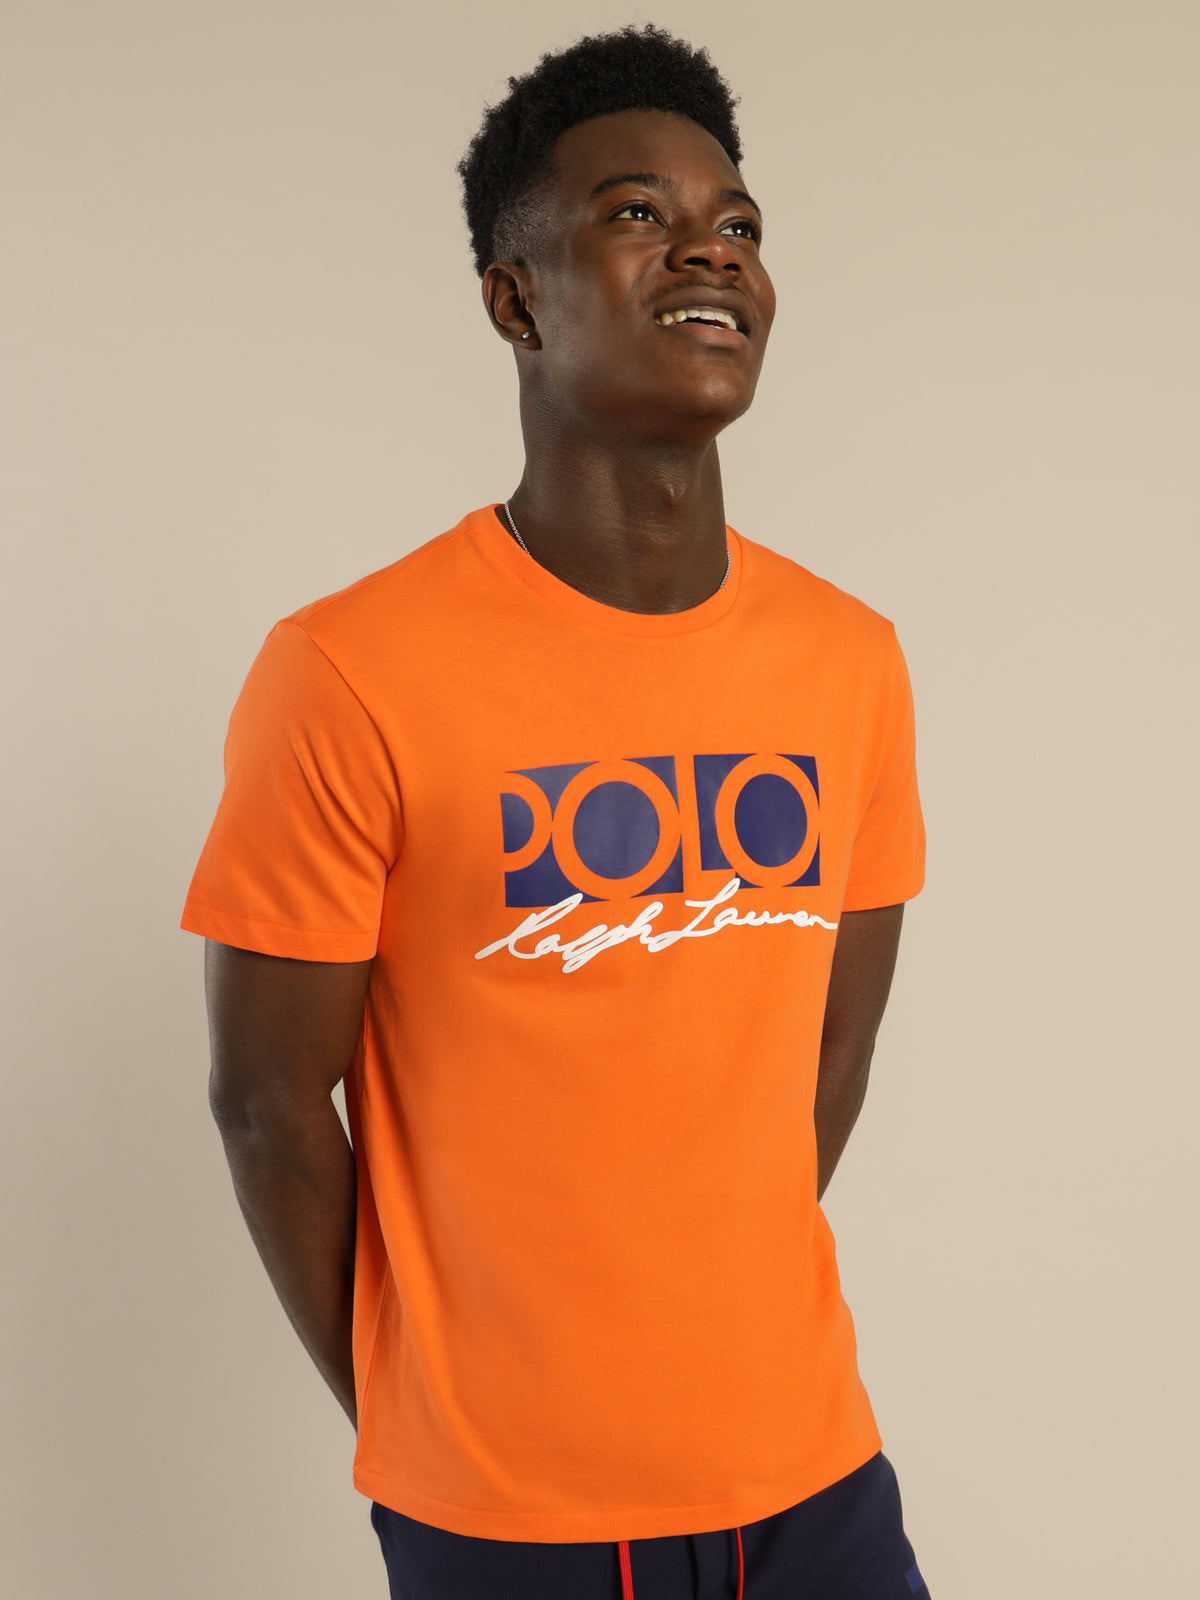 Polo Ralph Lauren Polo Sport Logo T-Shirt in Spectrum Orange | Orange